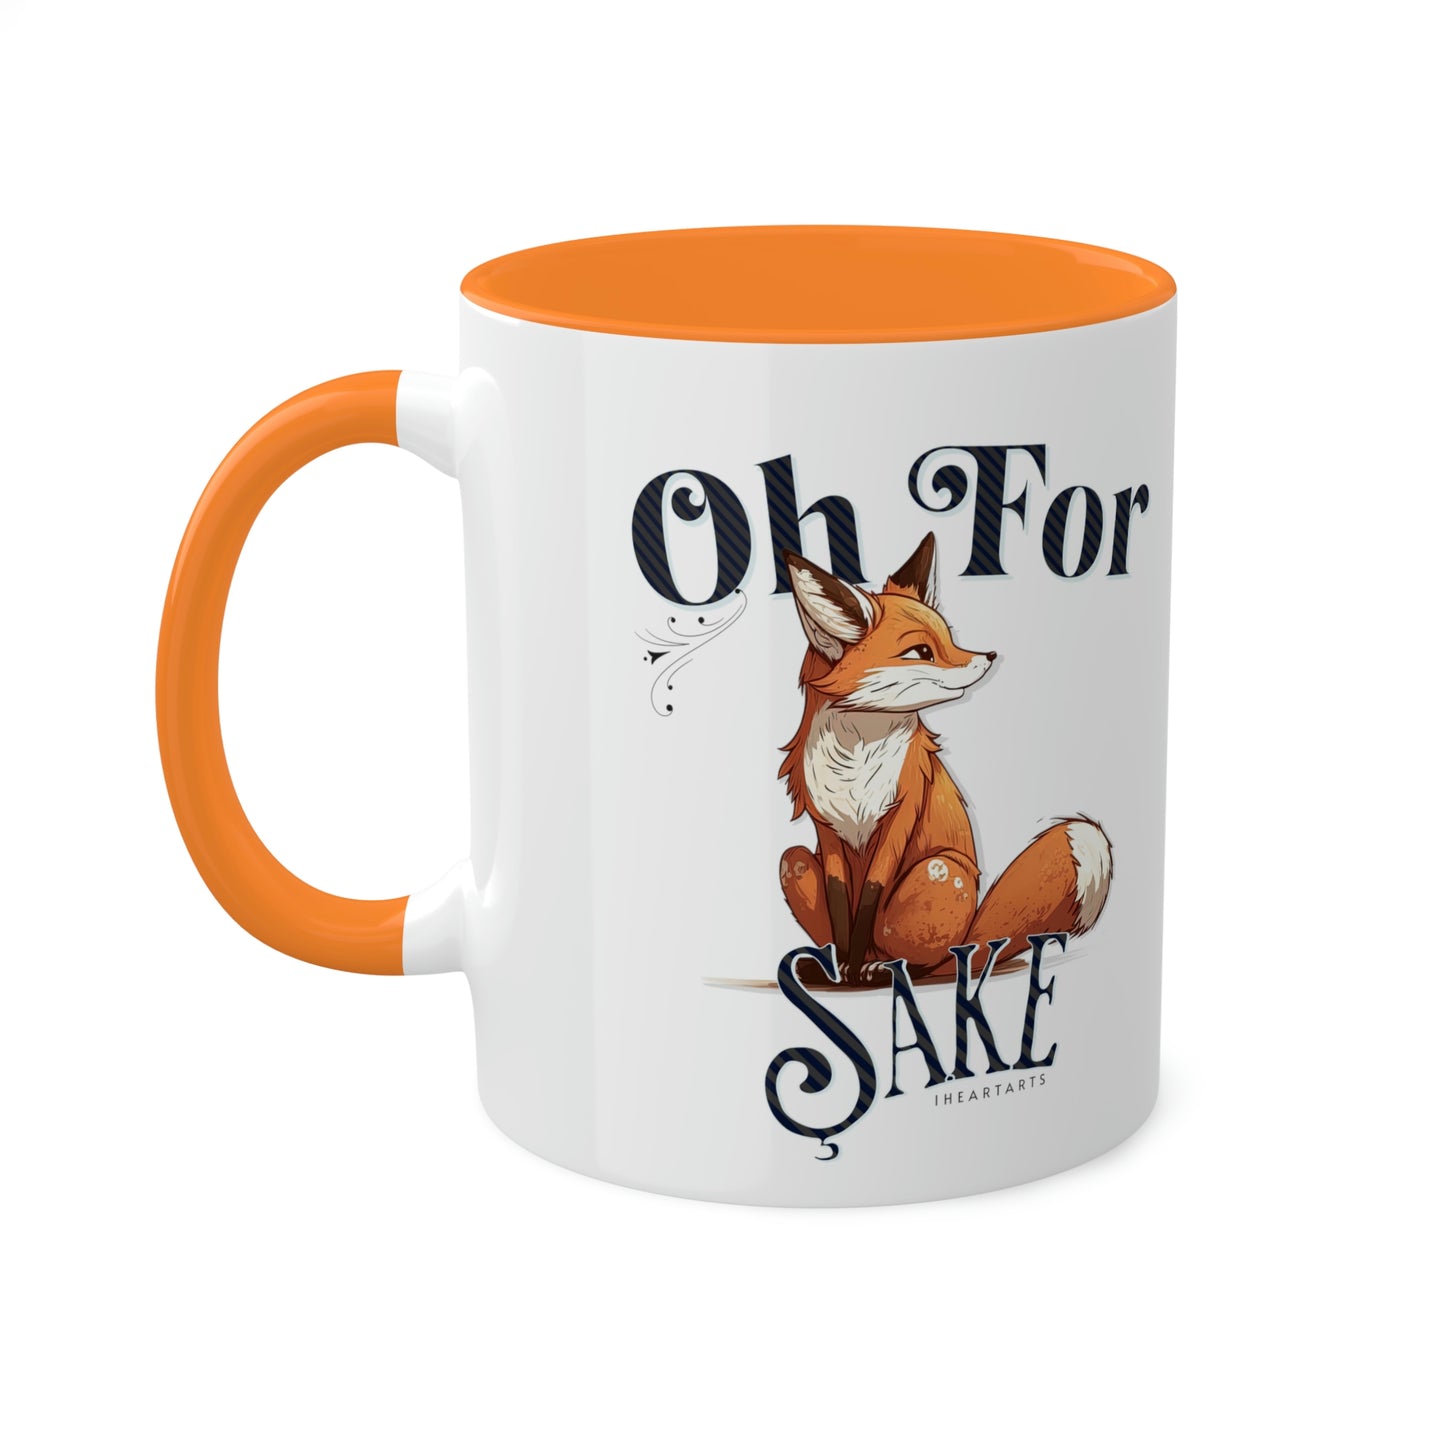 Oh For Fox Sake, Fox Lovers Gifts Idea, Cute Mugs, Funny Novelty Gift for Coffee & Tea Lovers - Orange Accent Mug, 11oz